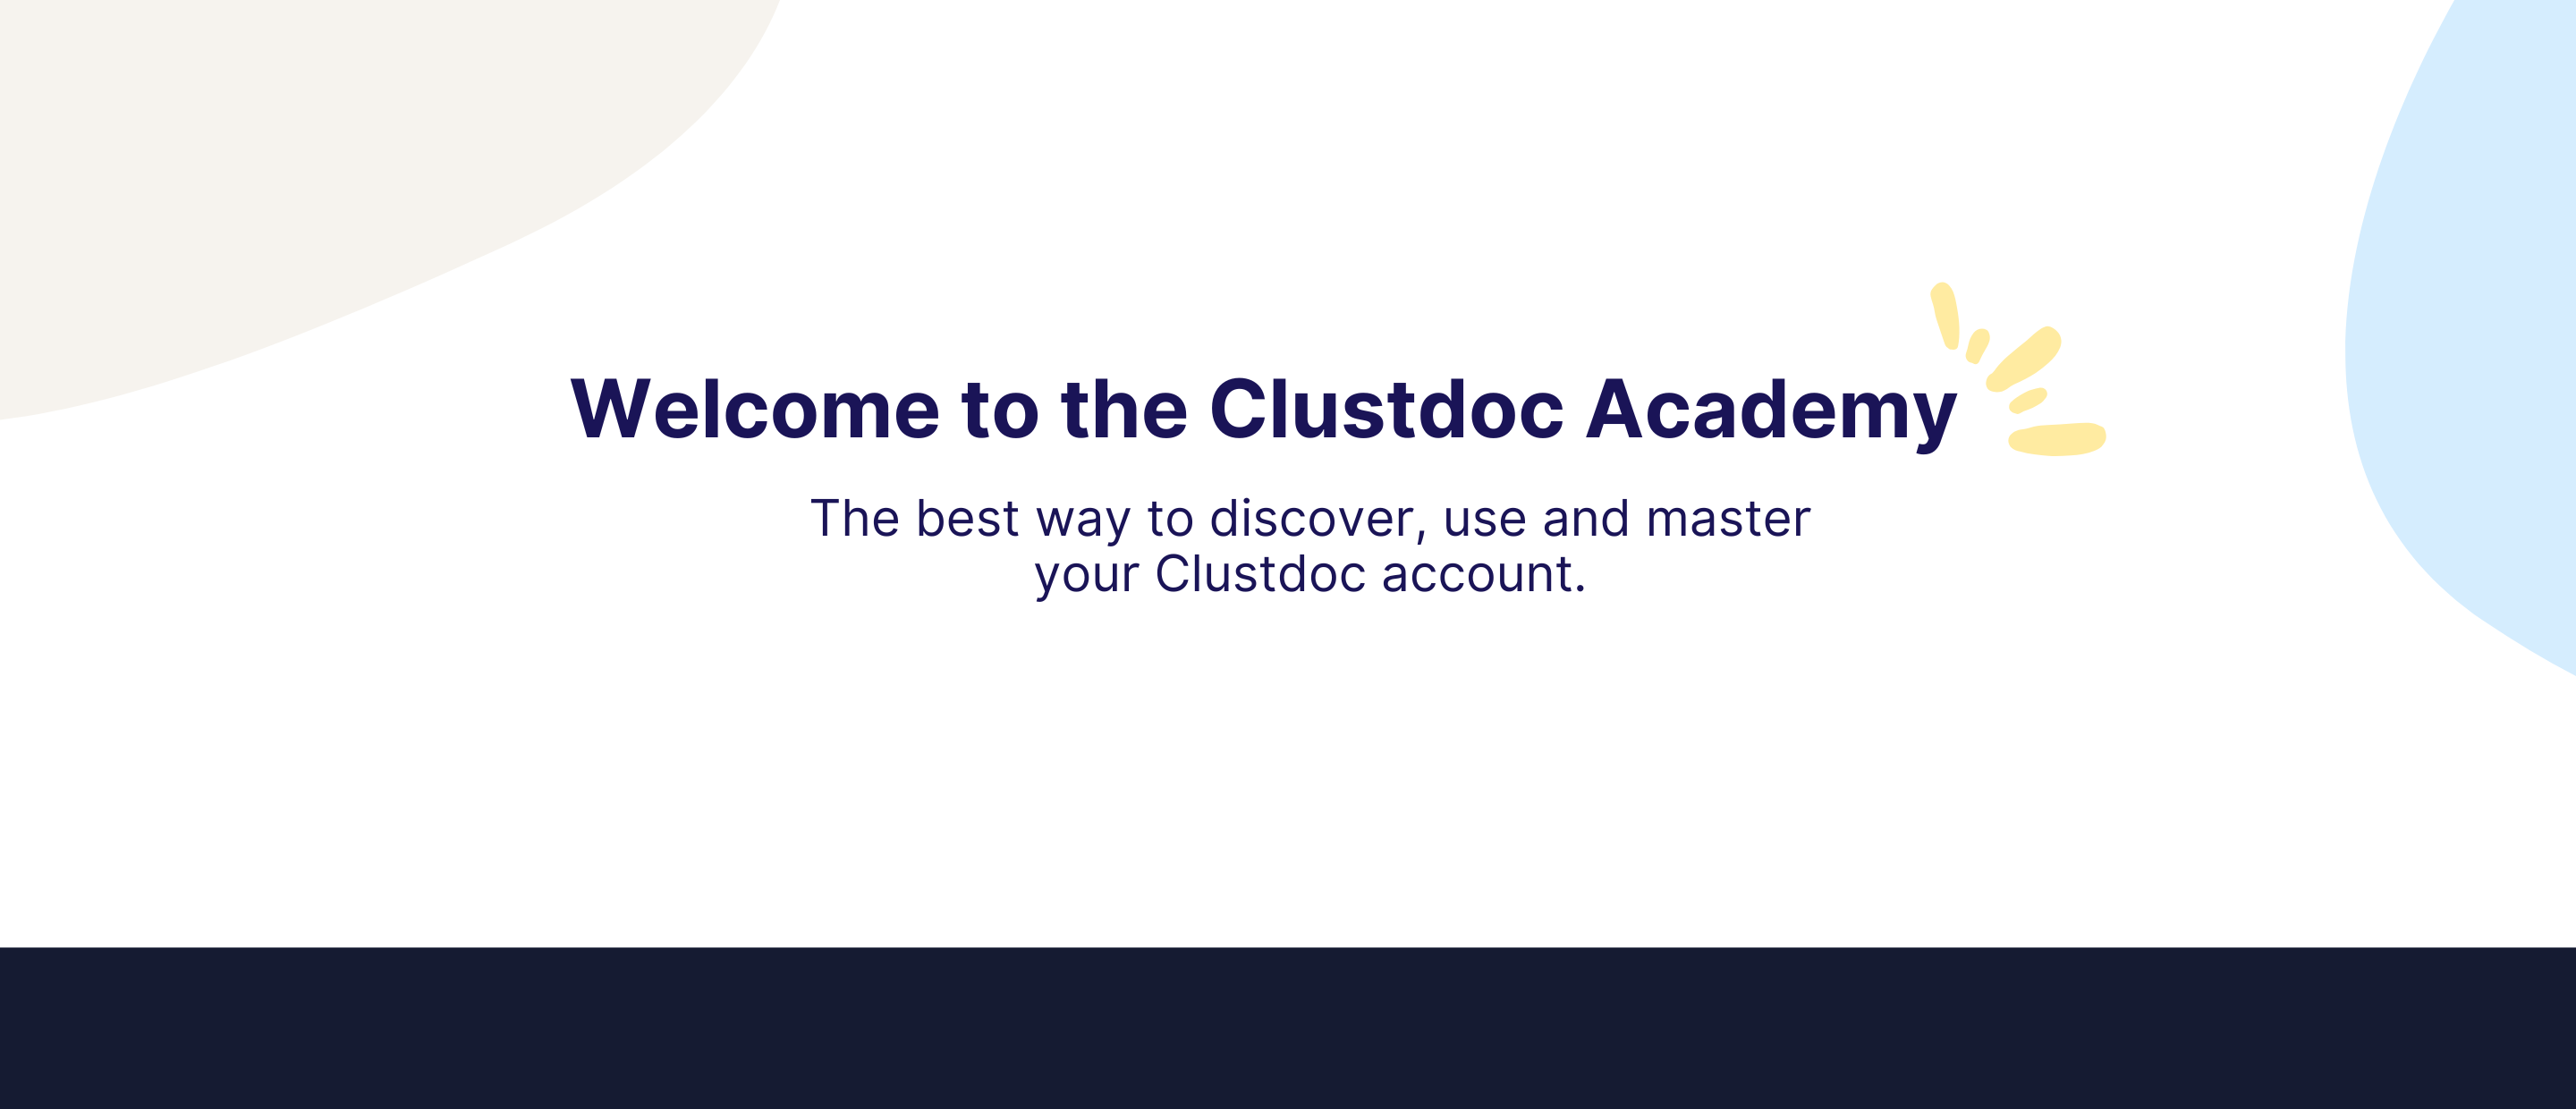 Clustdoc Academy Banner